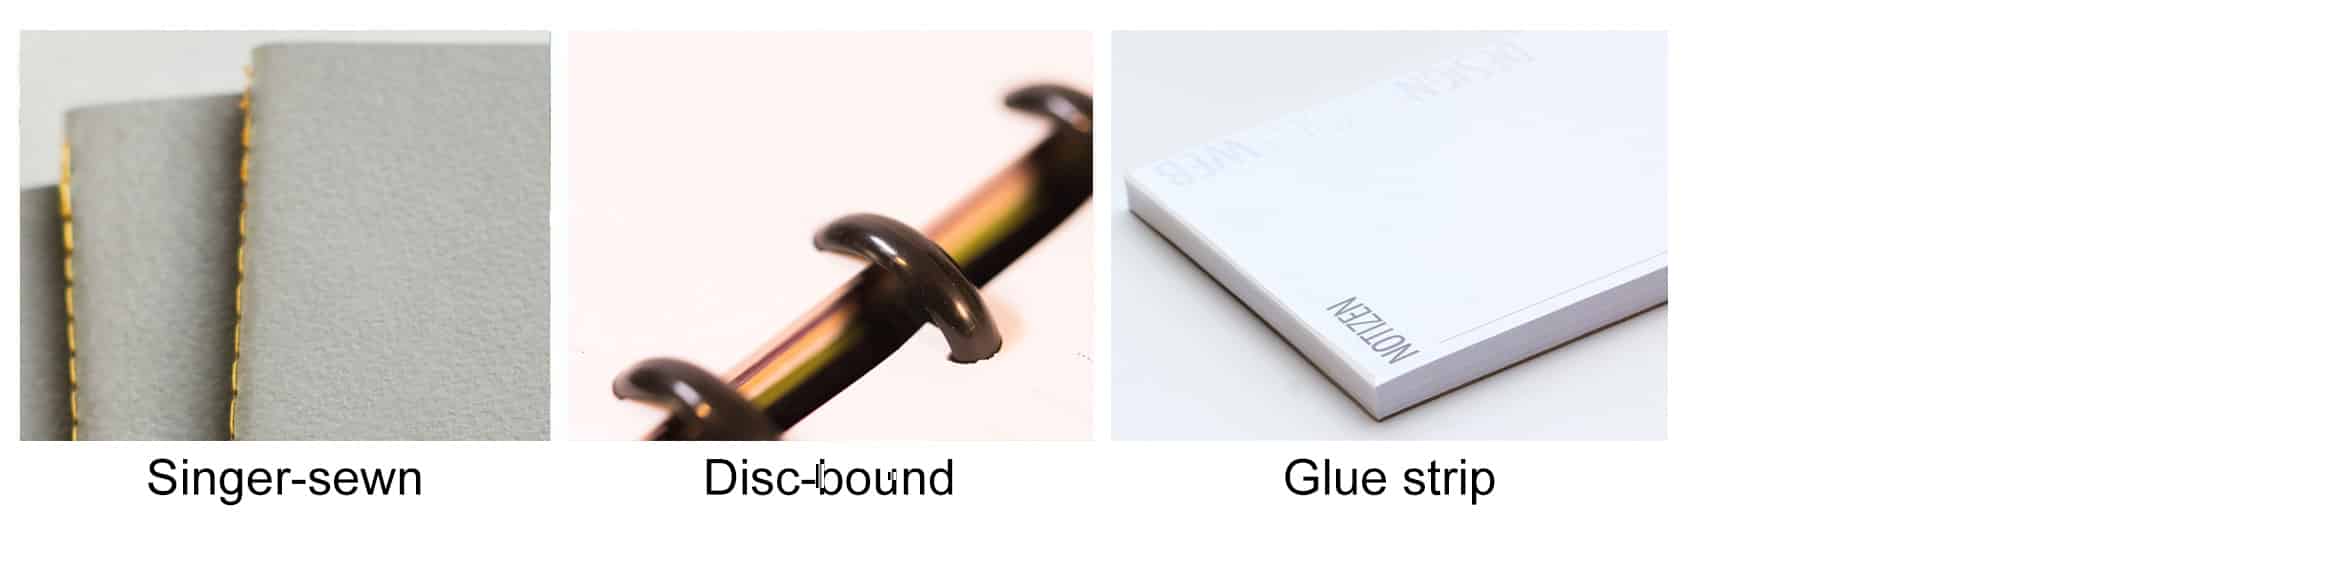 Bindings: Singer-sewn, Disc-bound, Glue strip